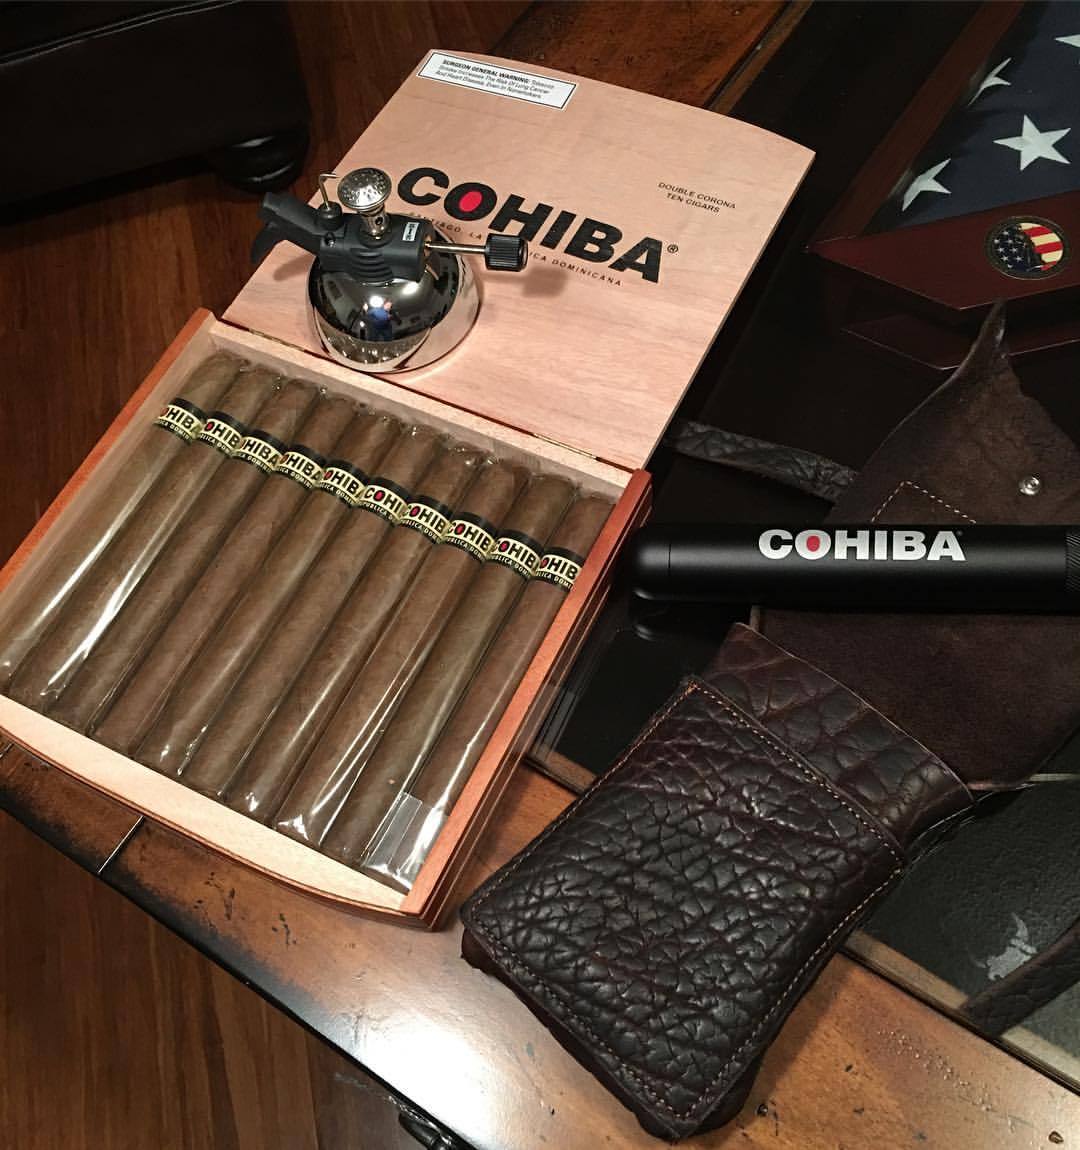 Legendary Saxon premium American bison leather cigar carrier, Cohiba box, and my new lighter 🔥🔥 an epic pairing! Thanks @cigarsinternational #madeinusa #veteranmade ⚒⚒⚒ #originaldesign #ruggedluxury #legendarysaxon #cigar #cigars #nowsmoking...